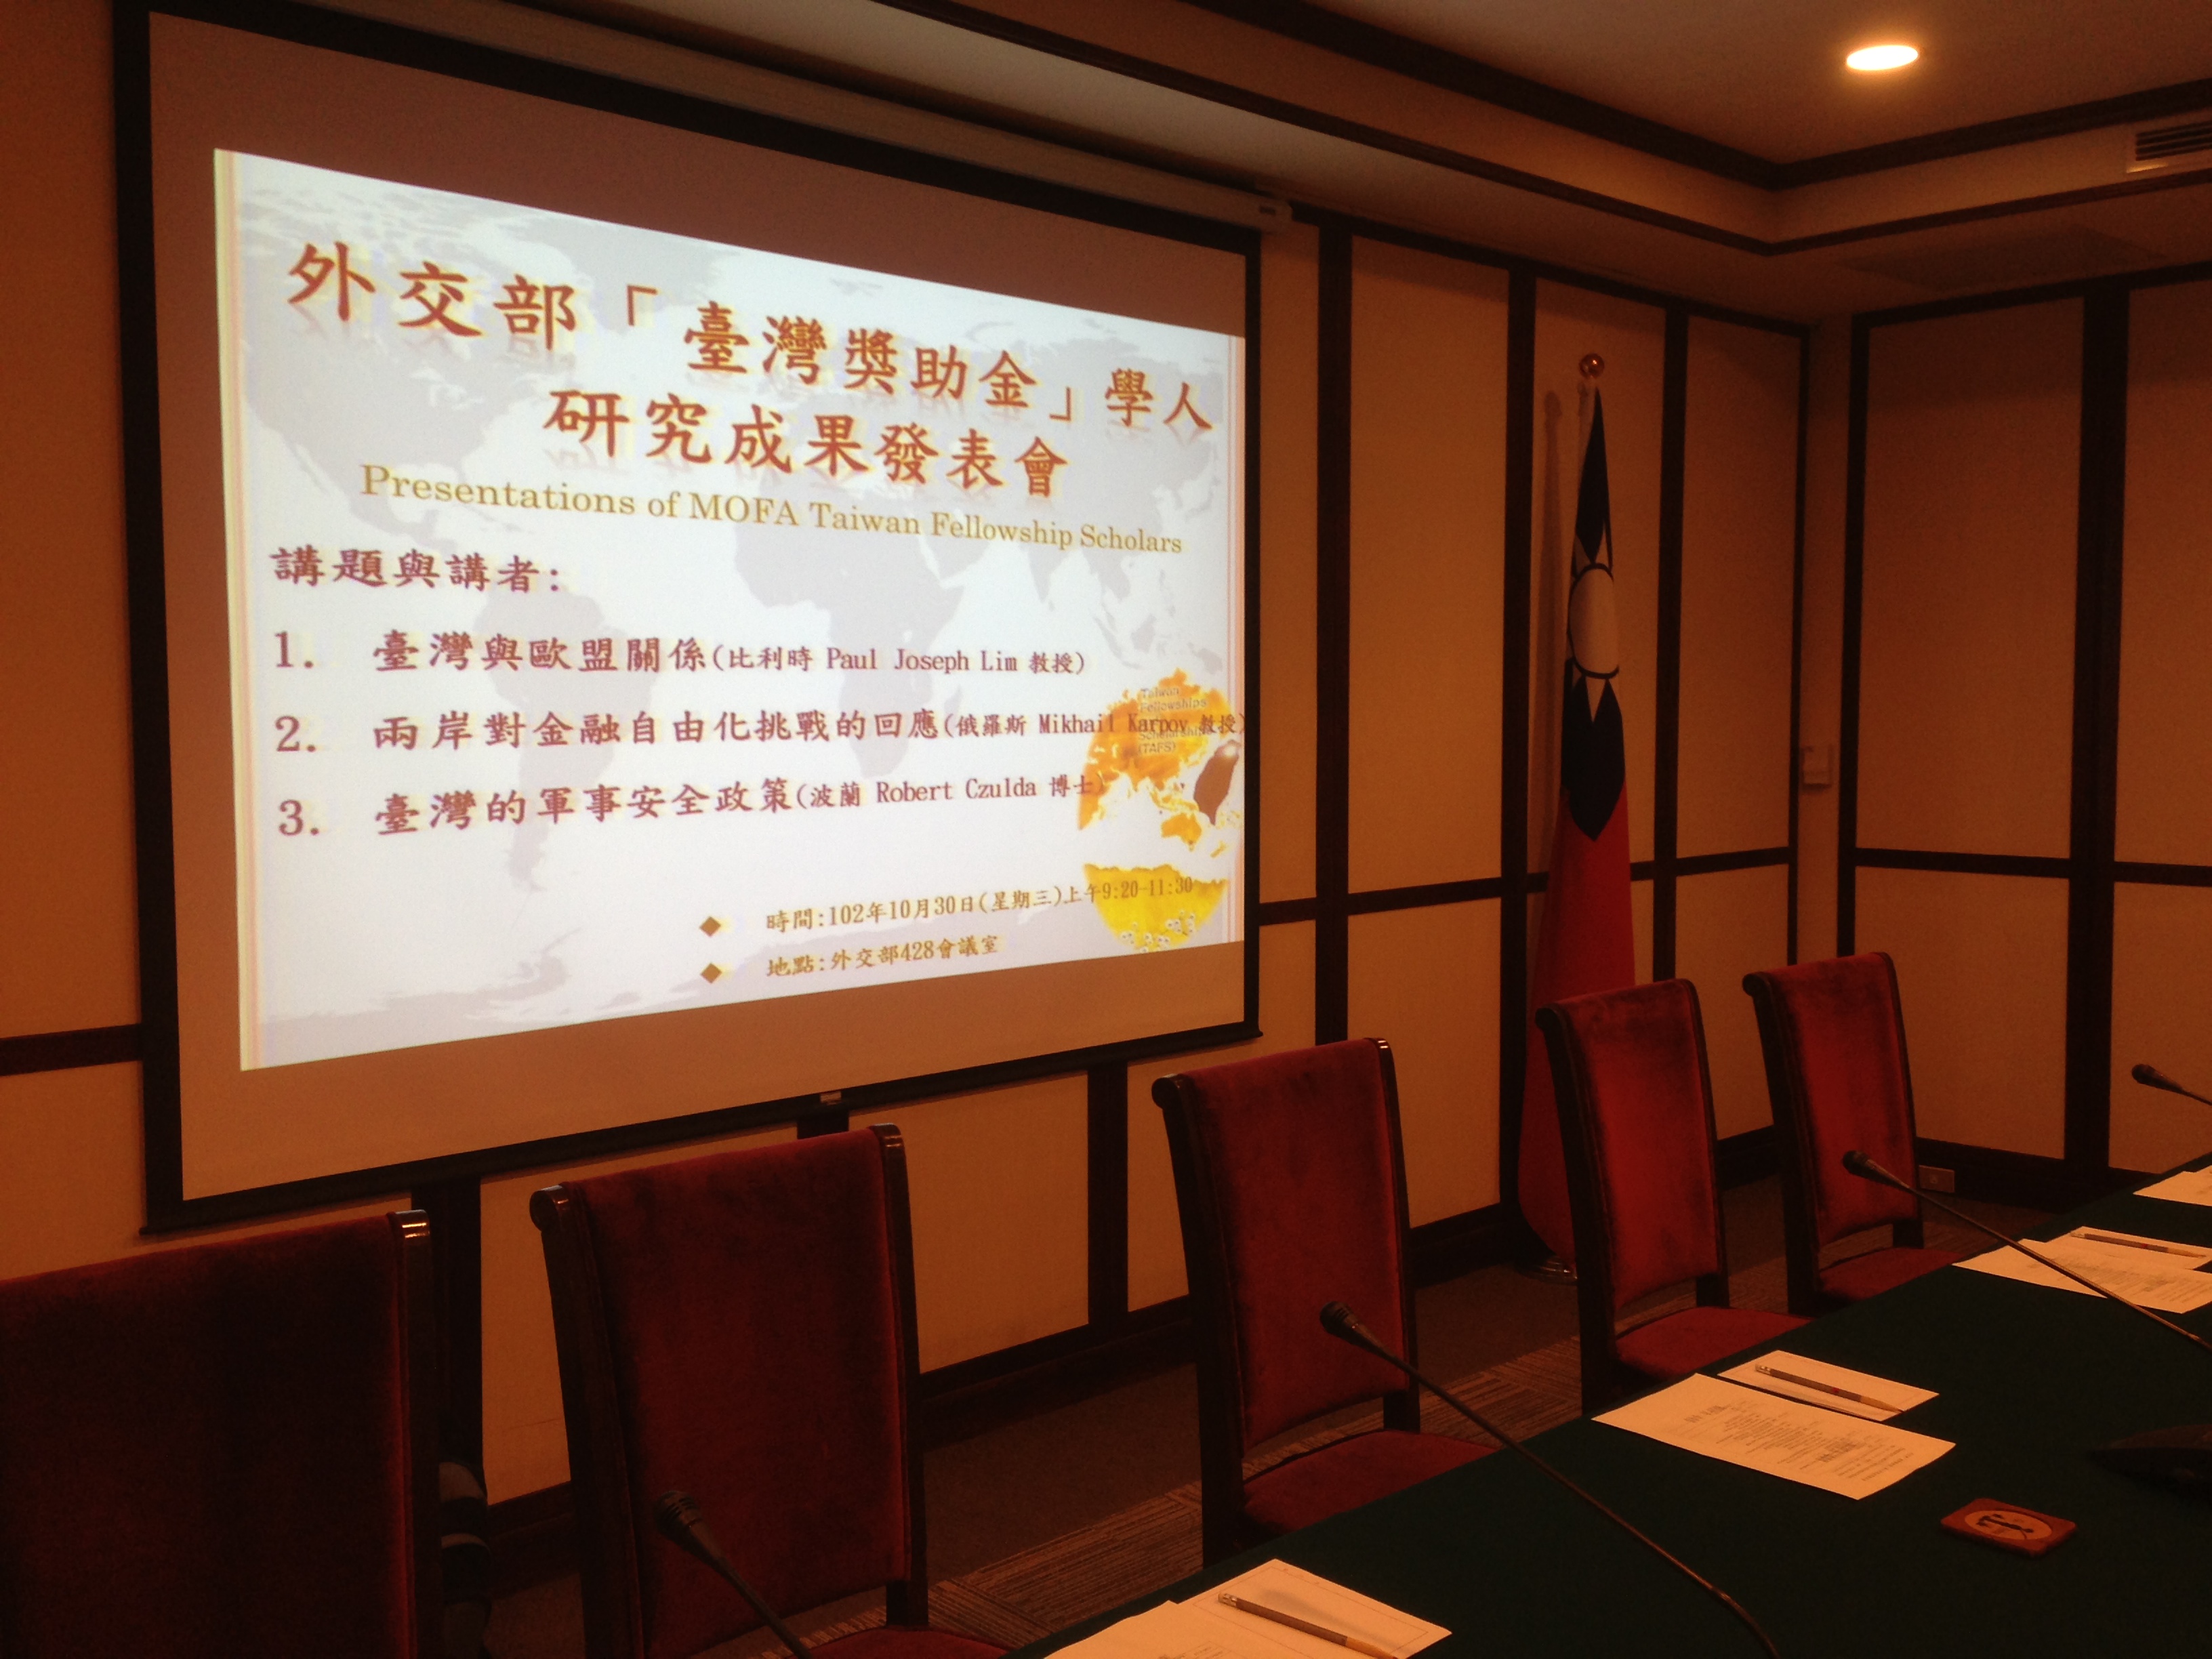 2013.10.30 Presentations of MOFA Taiwan Fellowship Scholars:picture1